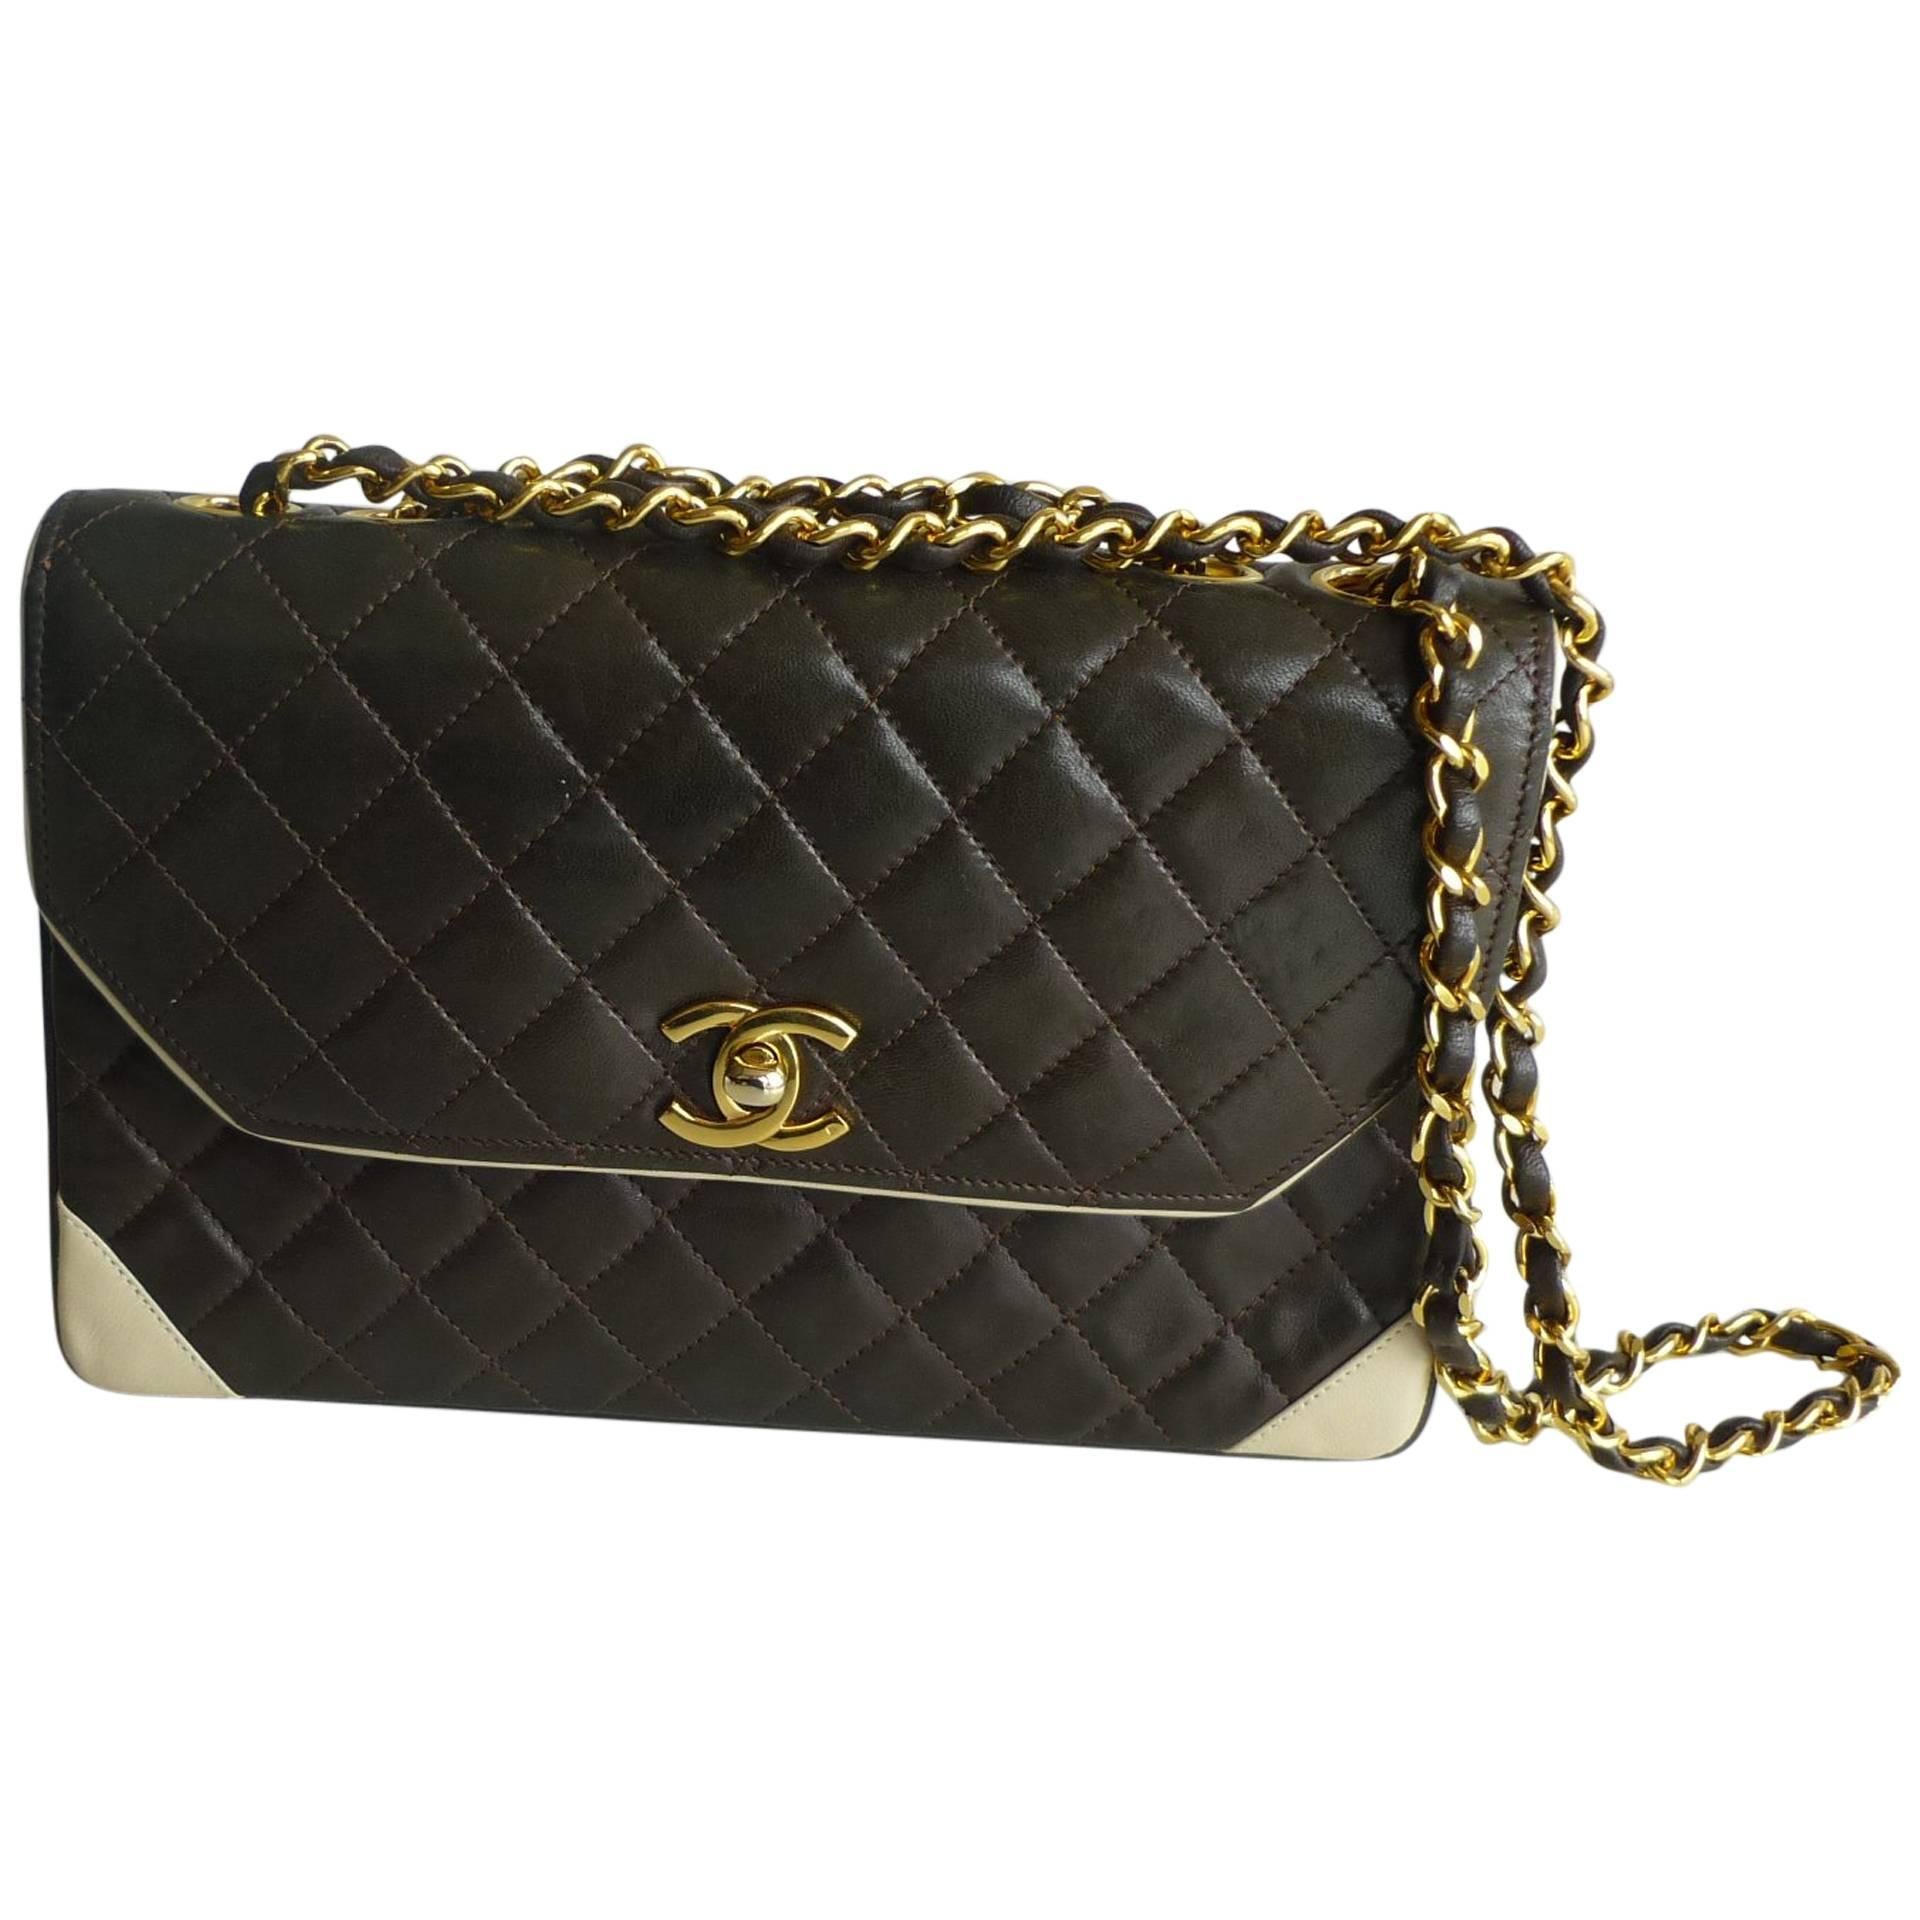 Beautiful Vintage Chanel two-tone (chocolate/beige) Flap Handbag